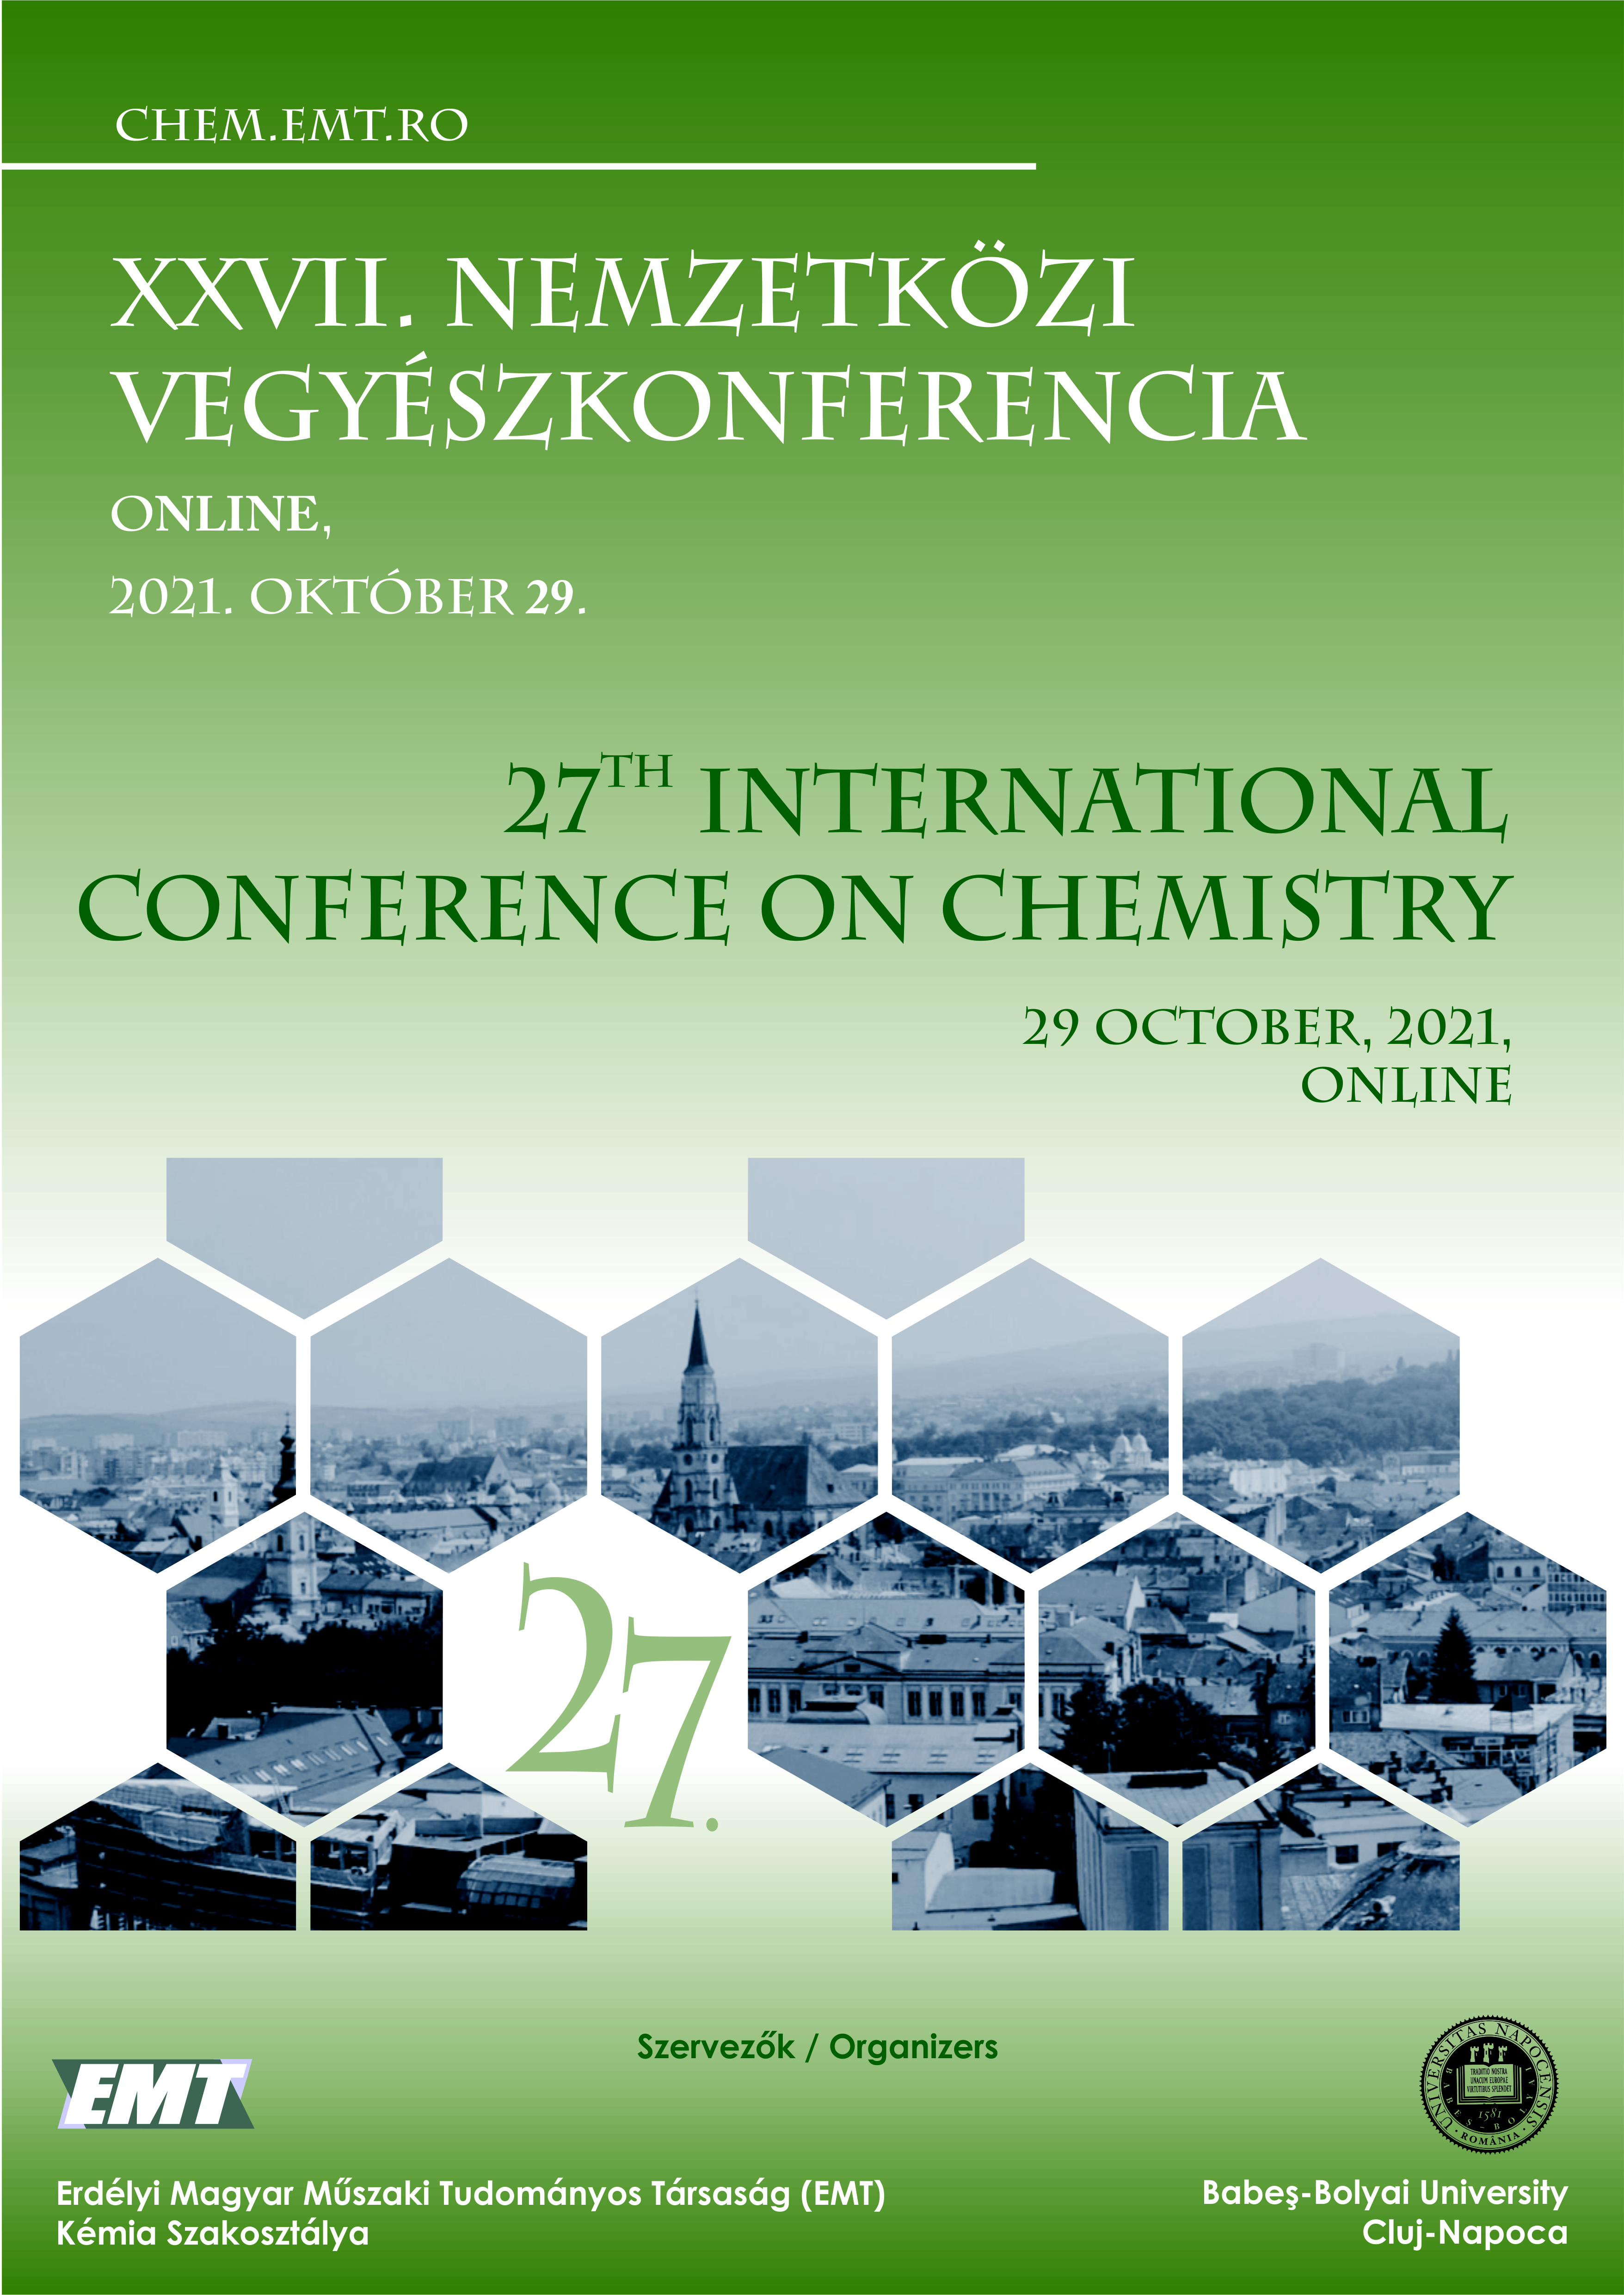 					View XXVII. Nemzetközi Vegyészkonferencia / 27th International Conference on Chemistry
				